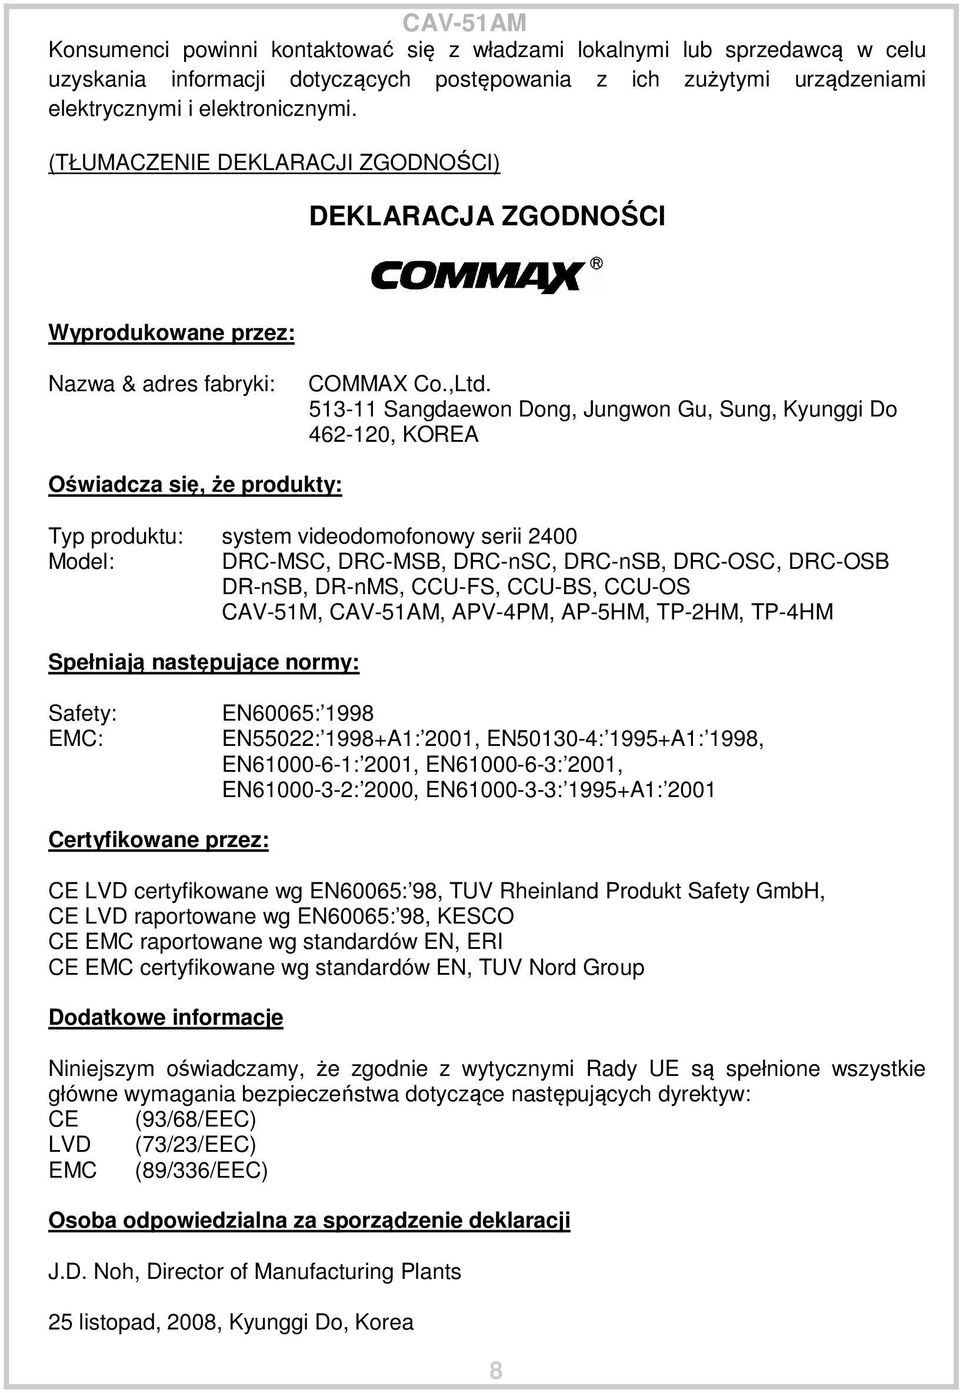 513-11 Sangdaewon Dong, Jungwon Gu, Sung, Kyunggi Do 462-120, KOREA Oświadcza się, że produkty: Typ produktu: system videodomofonowy serii 2400 Model: DRC-MSC, DRC-MSB, DRC-nSC, DRC-nSB, DRC-OSC,